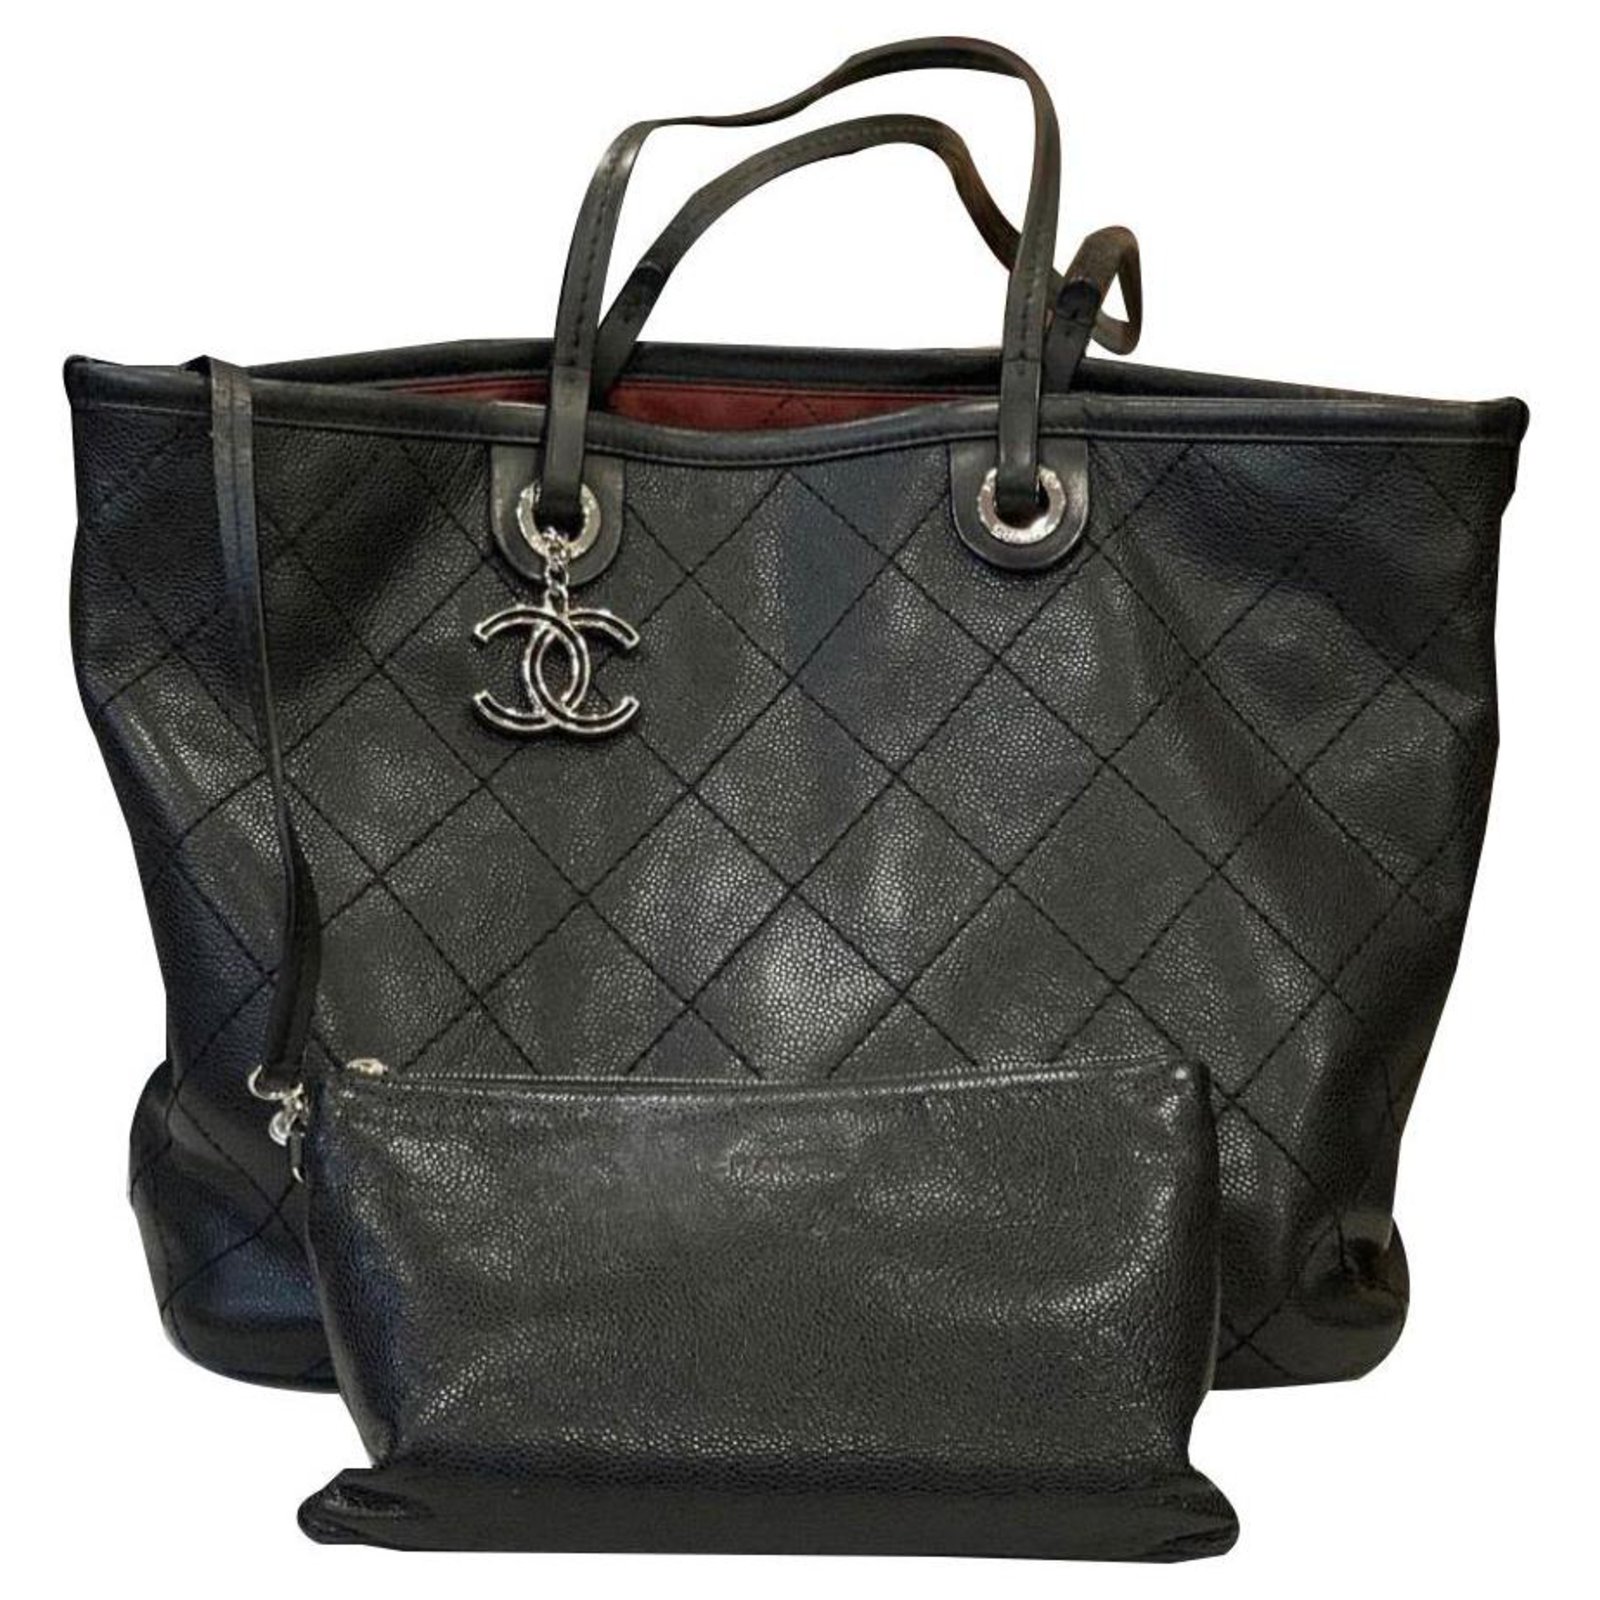 Coco Handle Rara Shopping bag Chanel - Tote bag Black Leather ref